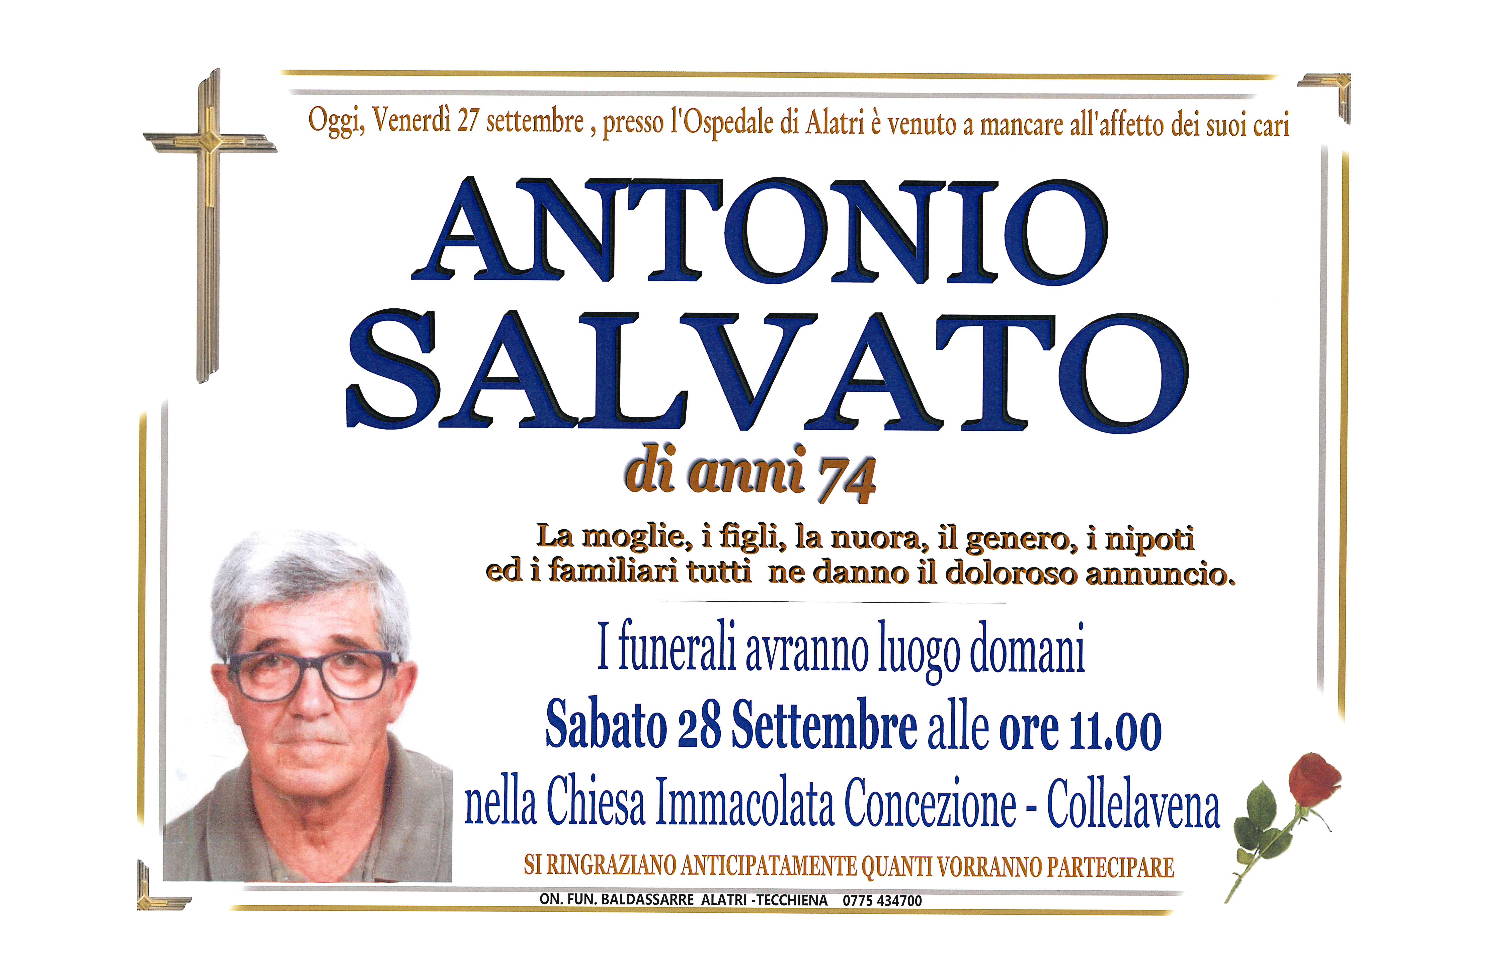 Antonio Salvato